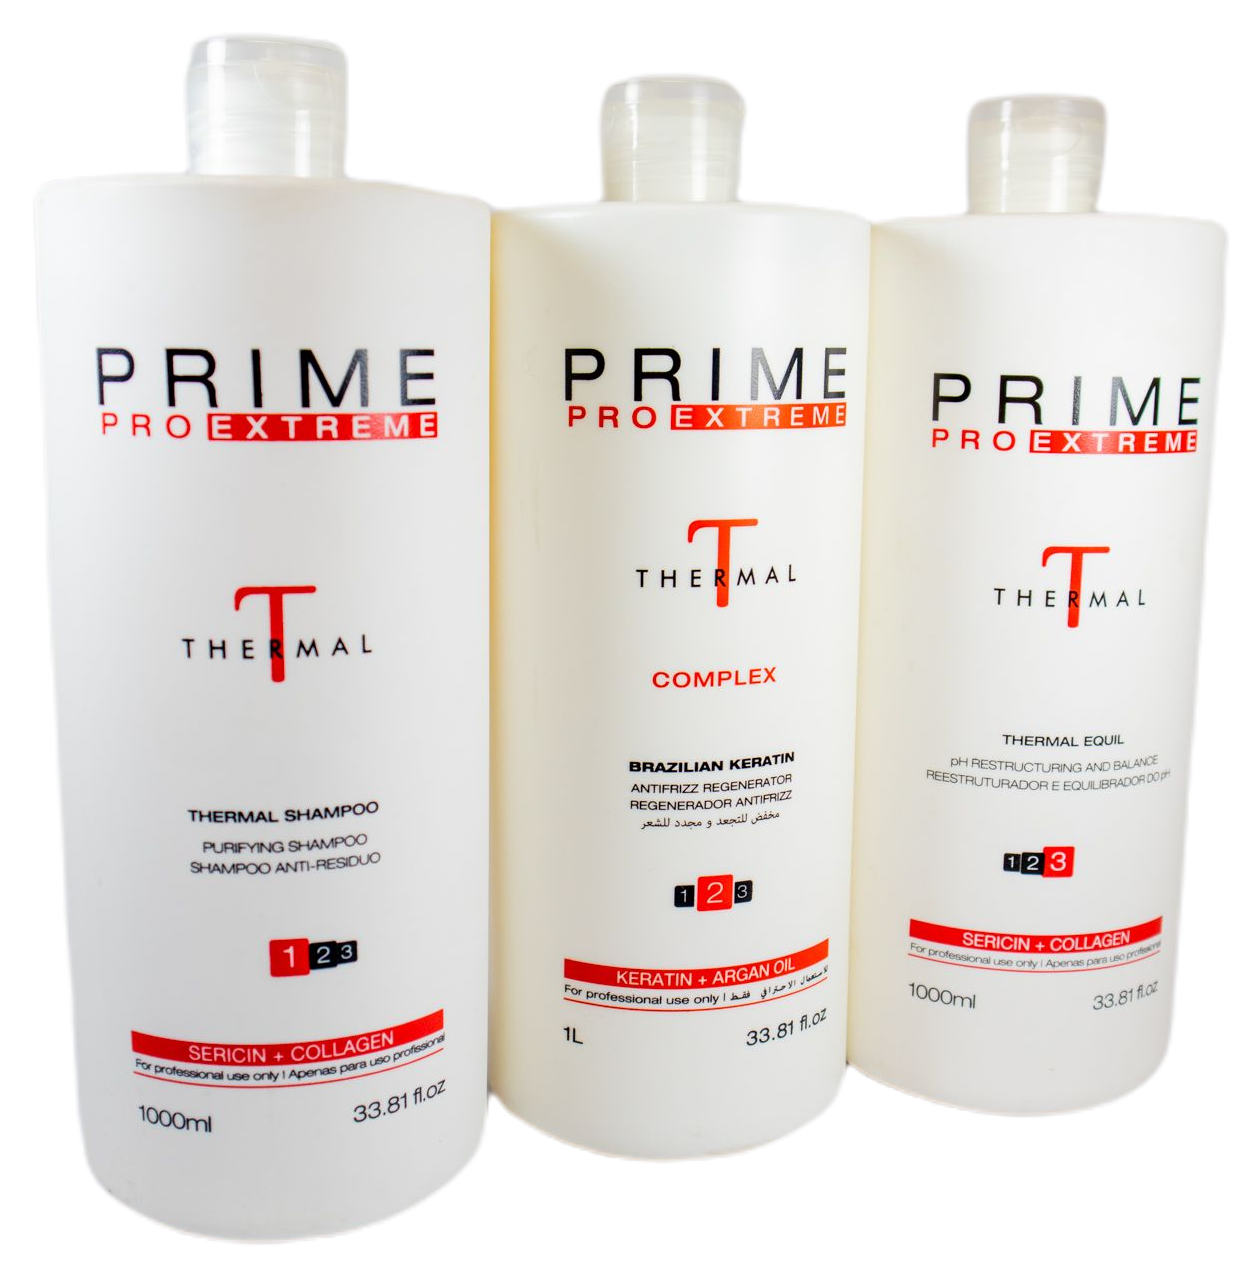 Prime Pro Extreme Kit Professional Thermal Complex Hair Treatment  3x1 - Prime Pro